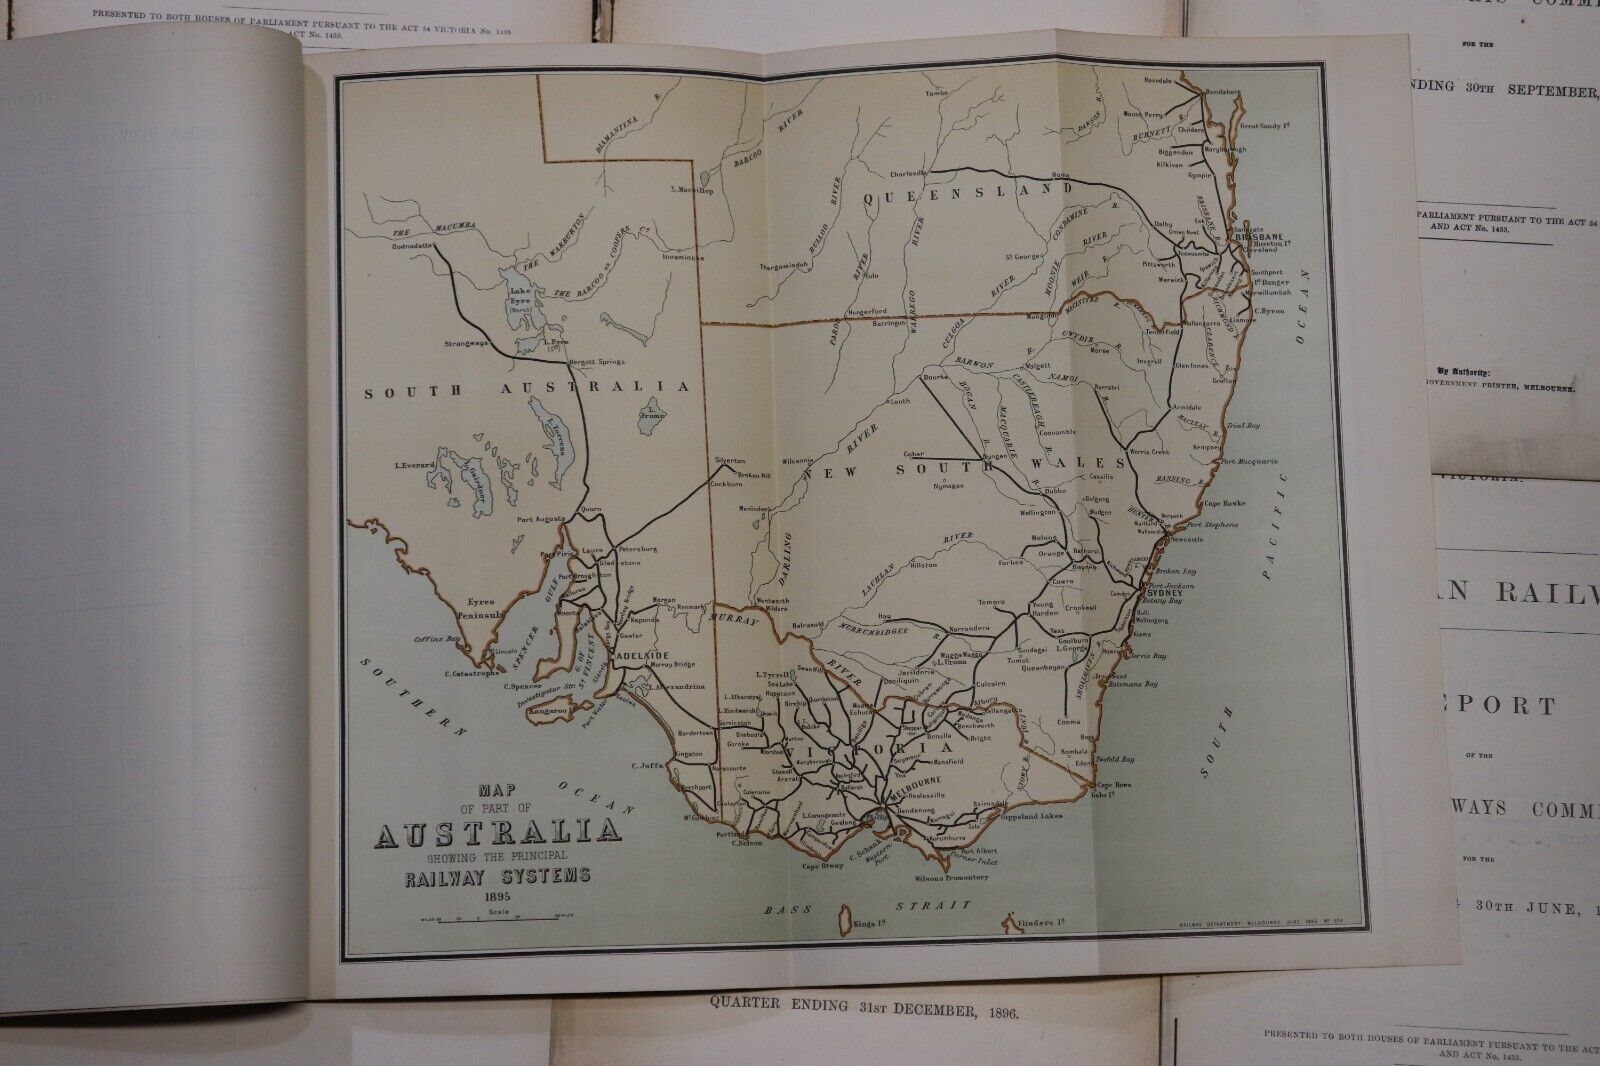 Parliamentary Papers: Victorian Railways - 1890's - Australia Train Books